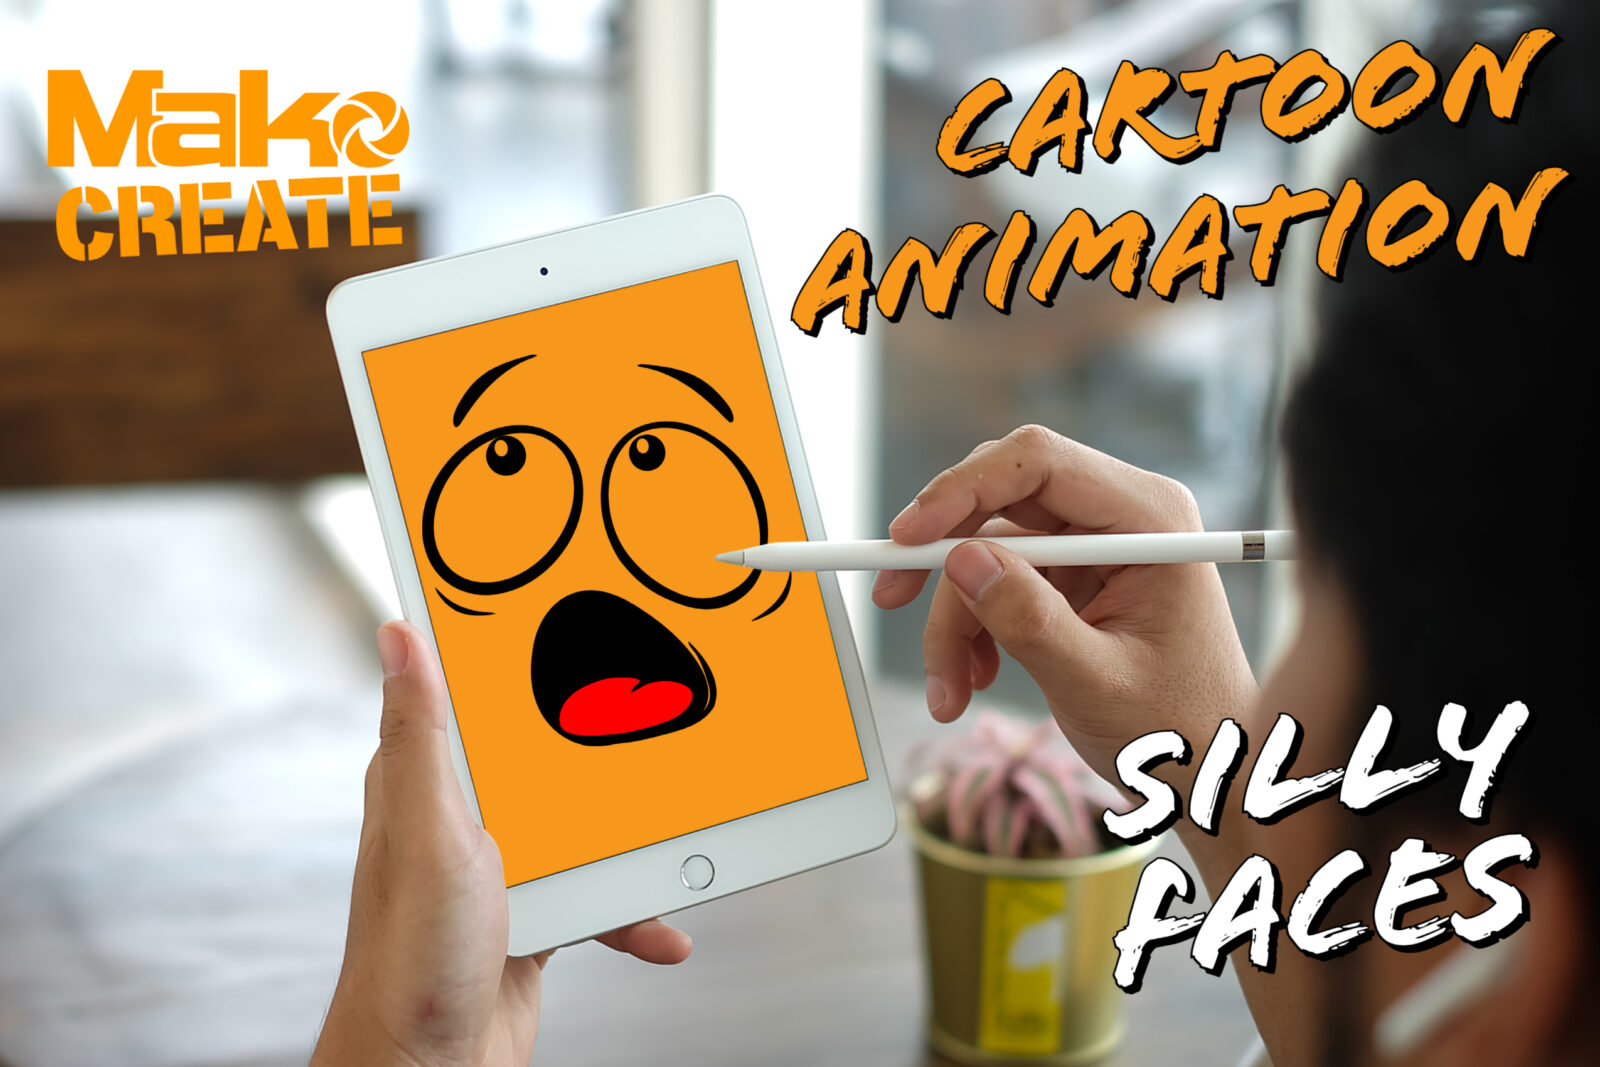 Cartoon Animation - Make your face silly! - Mako Create